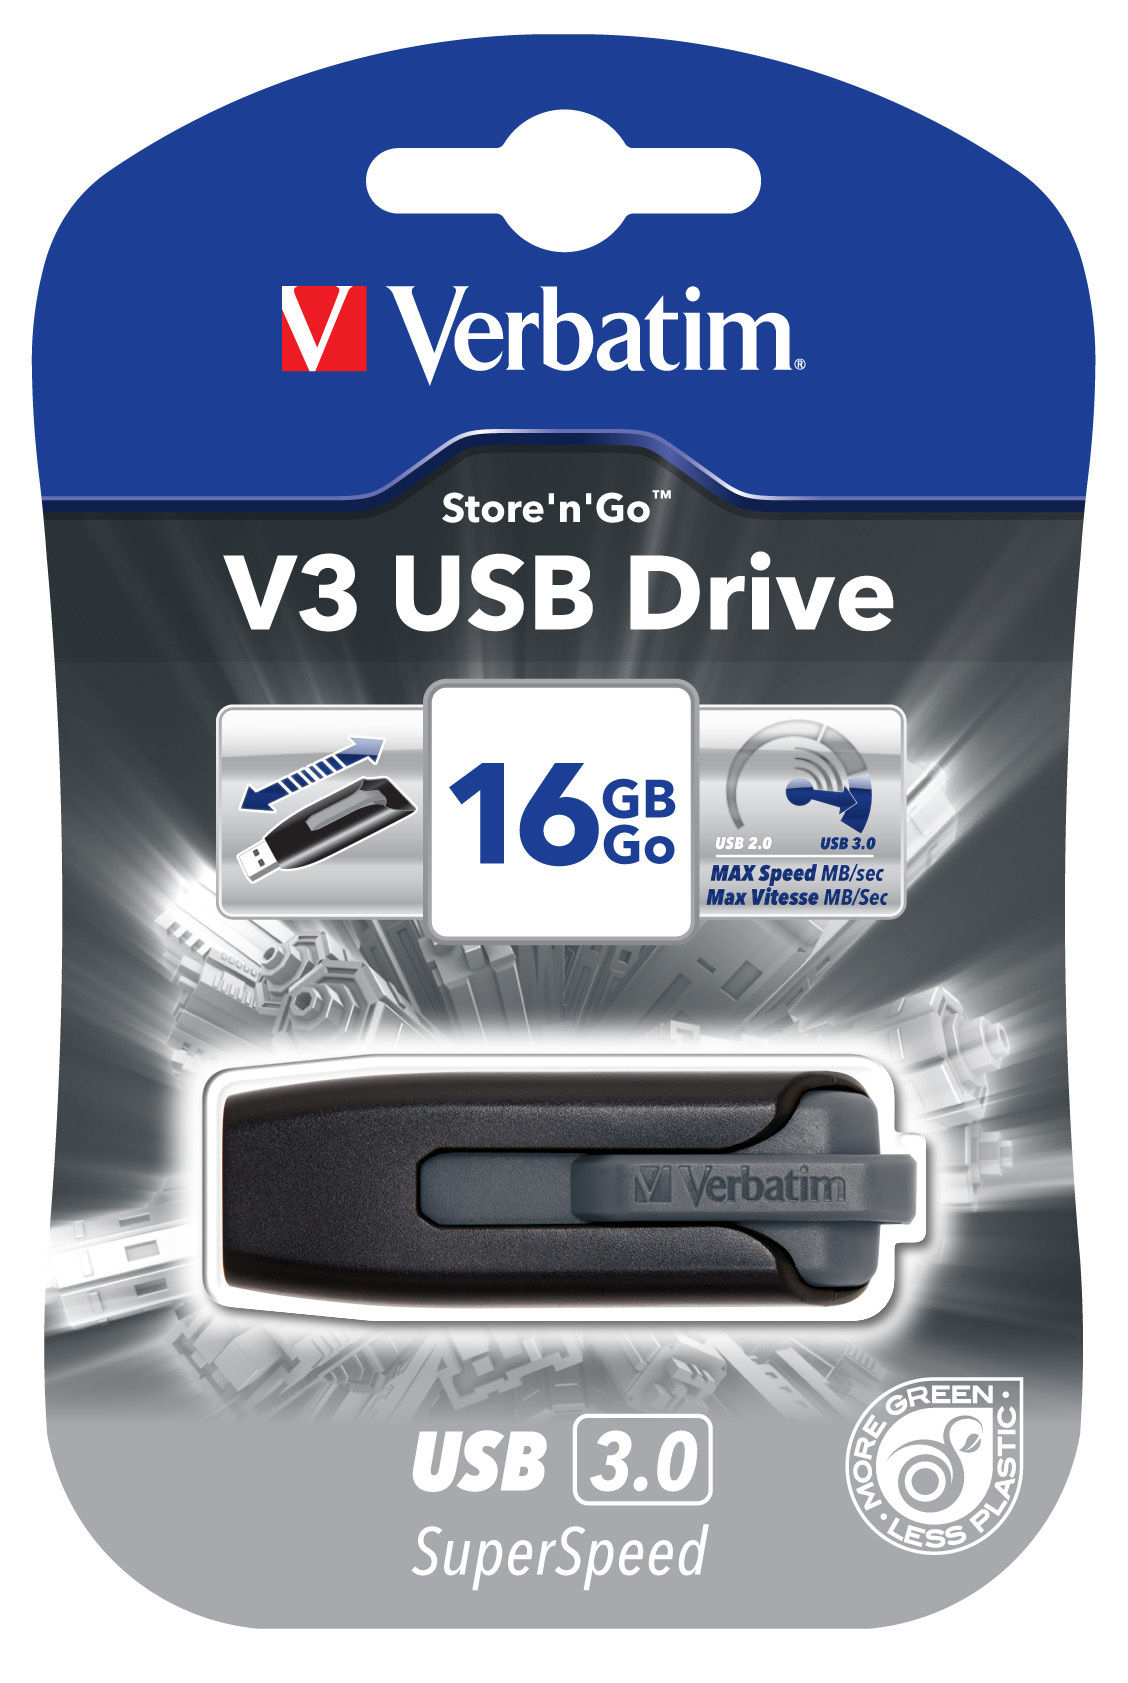 Verbatim 64gb Istore 'n' Go Dual Usb 3.0 Flash Drive 64 Gb Lightning Usb 